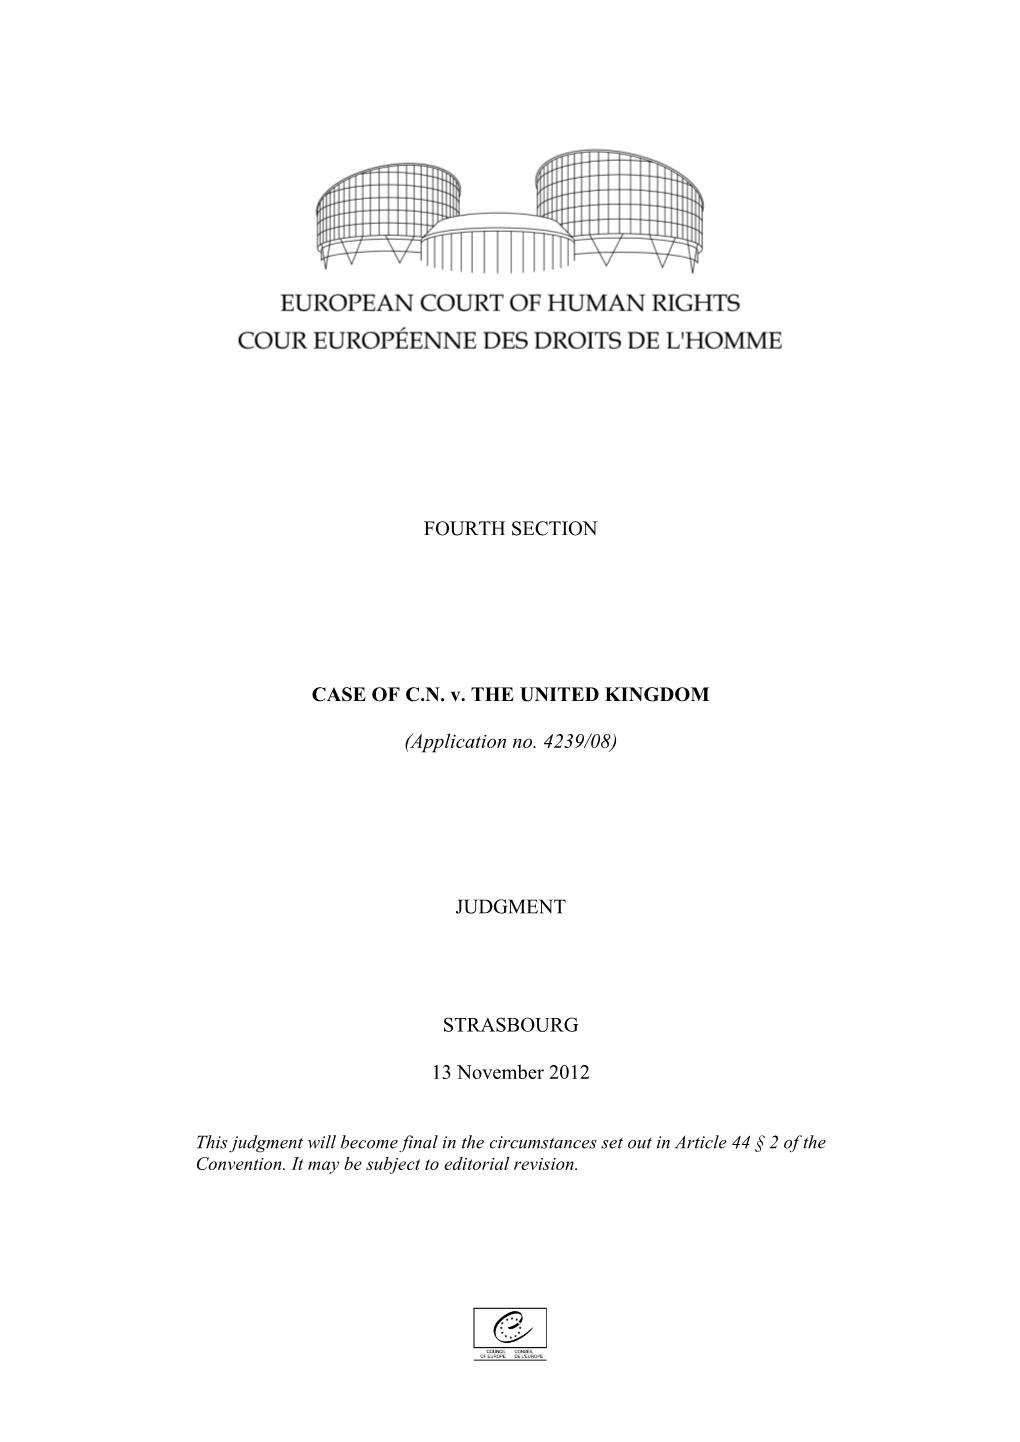 FOURTH SECTION CASE of CN V. the UNITED KINGDOM